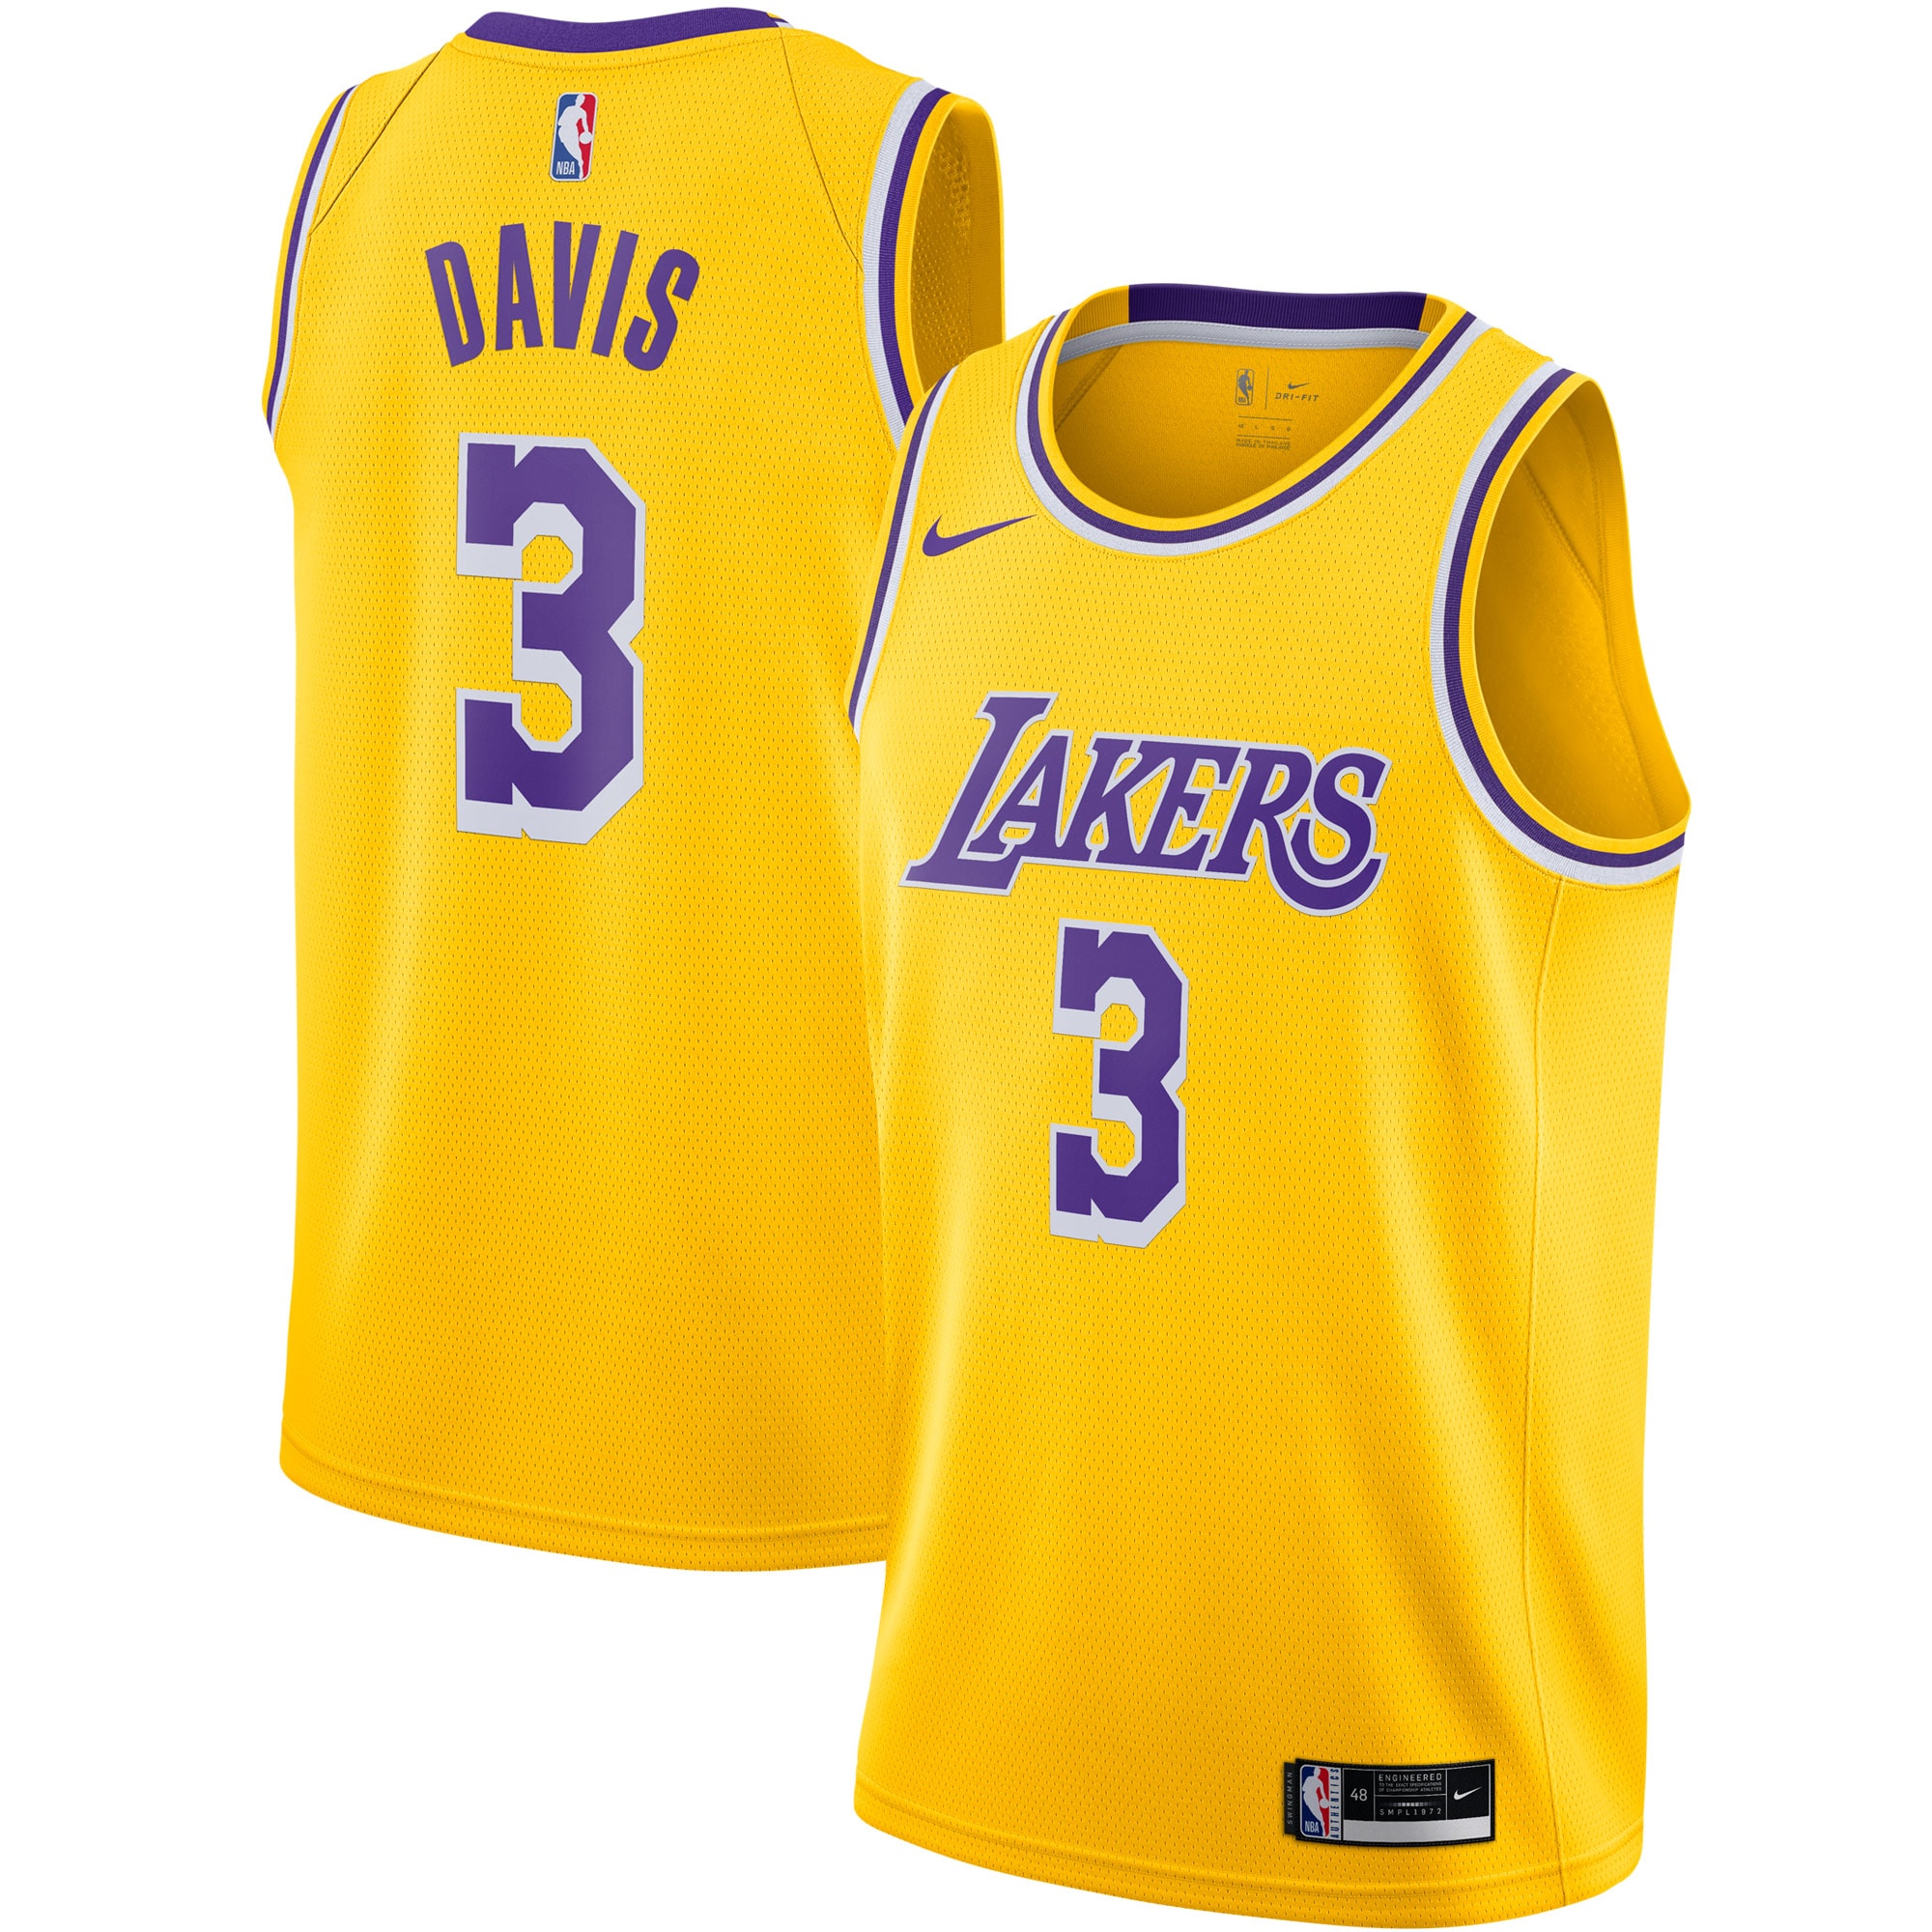 Men's Nike Anthony Davis Gold Los Angeles Lakers Swingman Jersey - Icon Edition - image 1 of 3